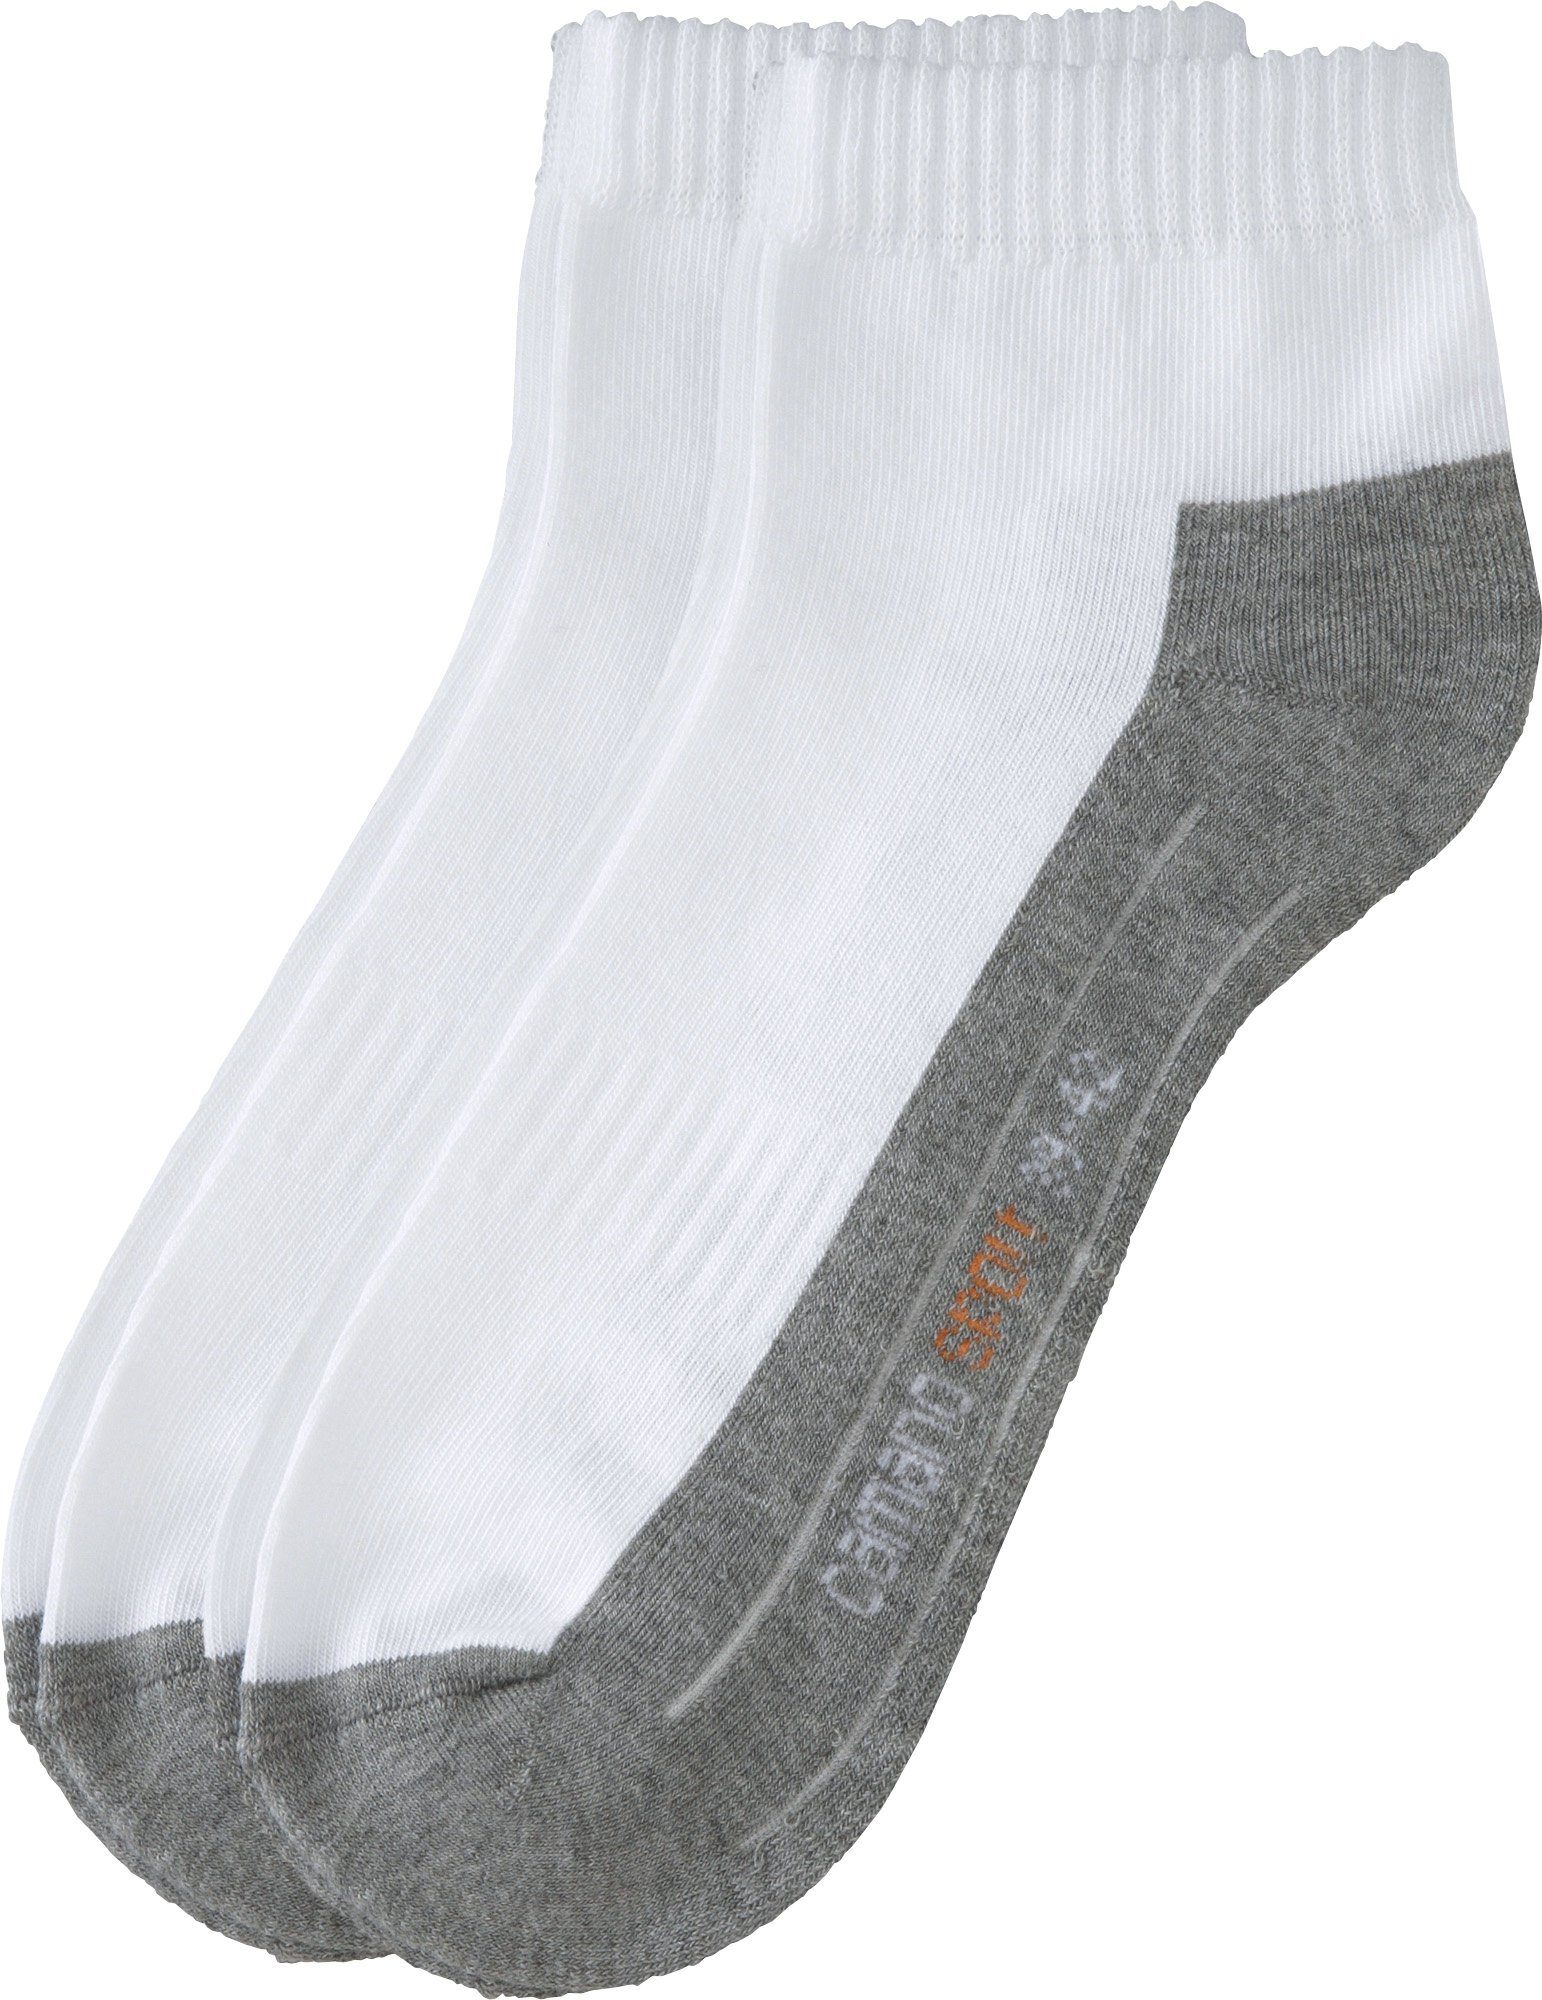 Camano Socken Unisex-Sport-Kurzsocken 2 Paar Uni weiß